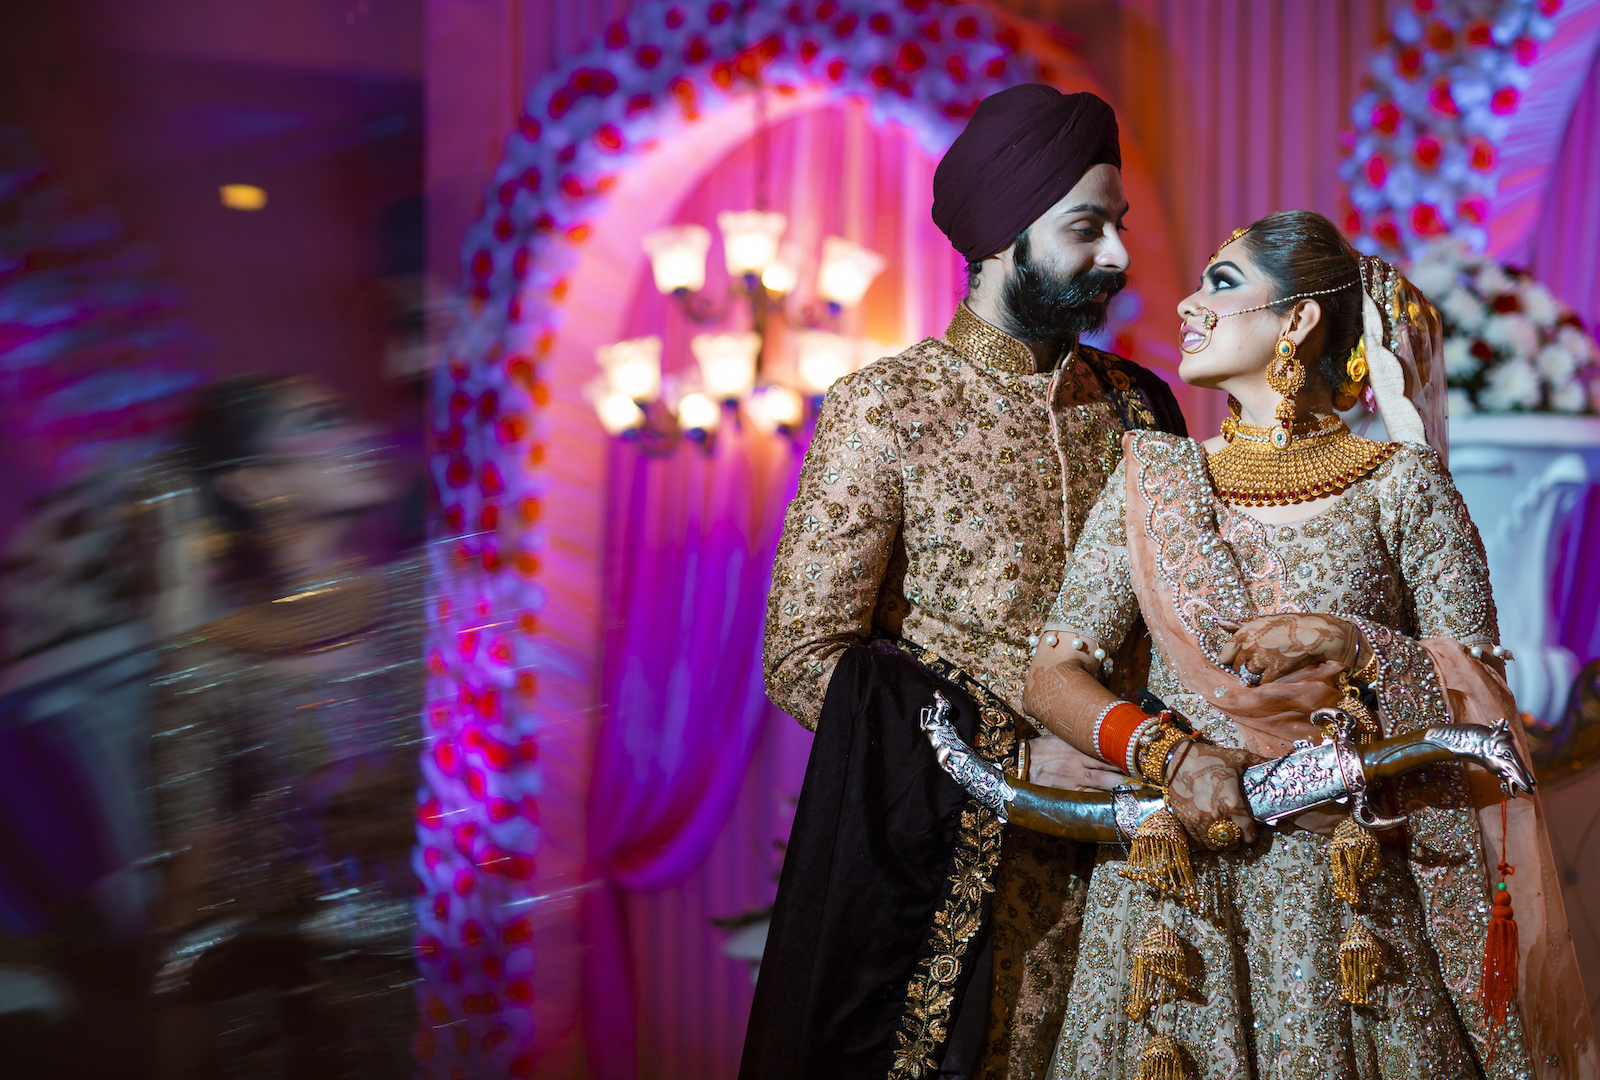 Indian wedding photographers in delhi, india